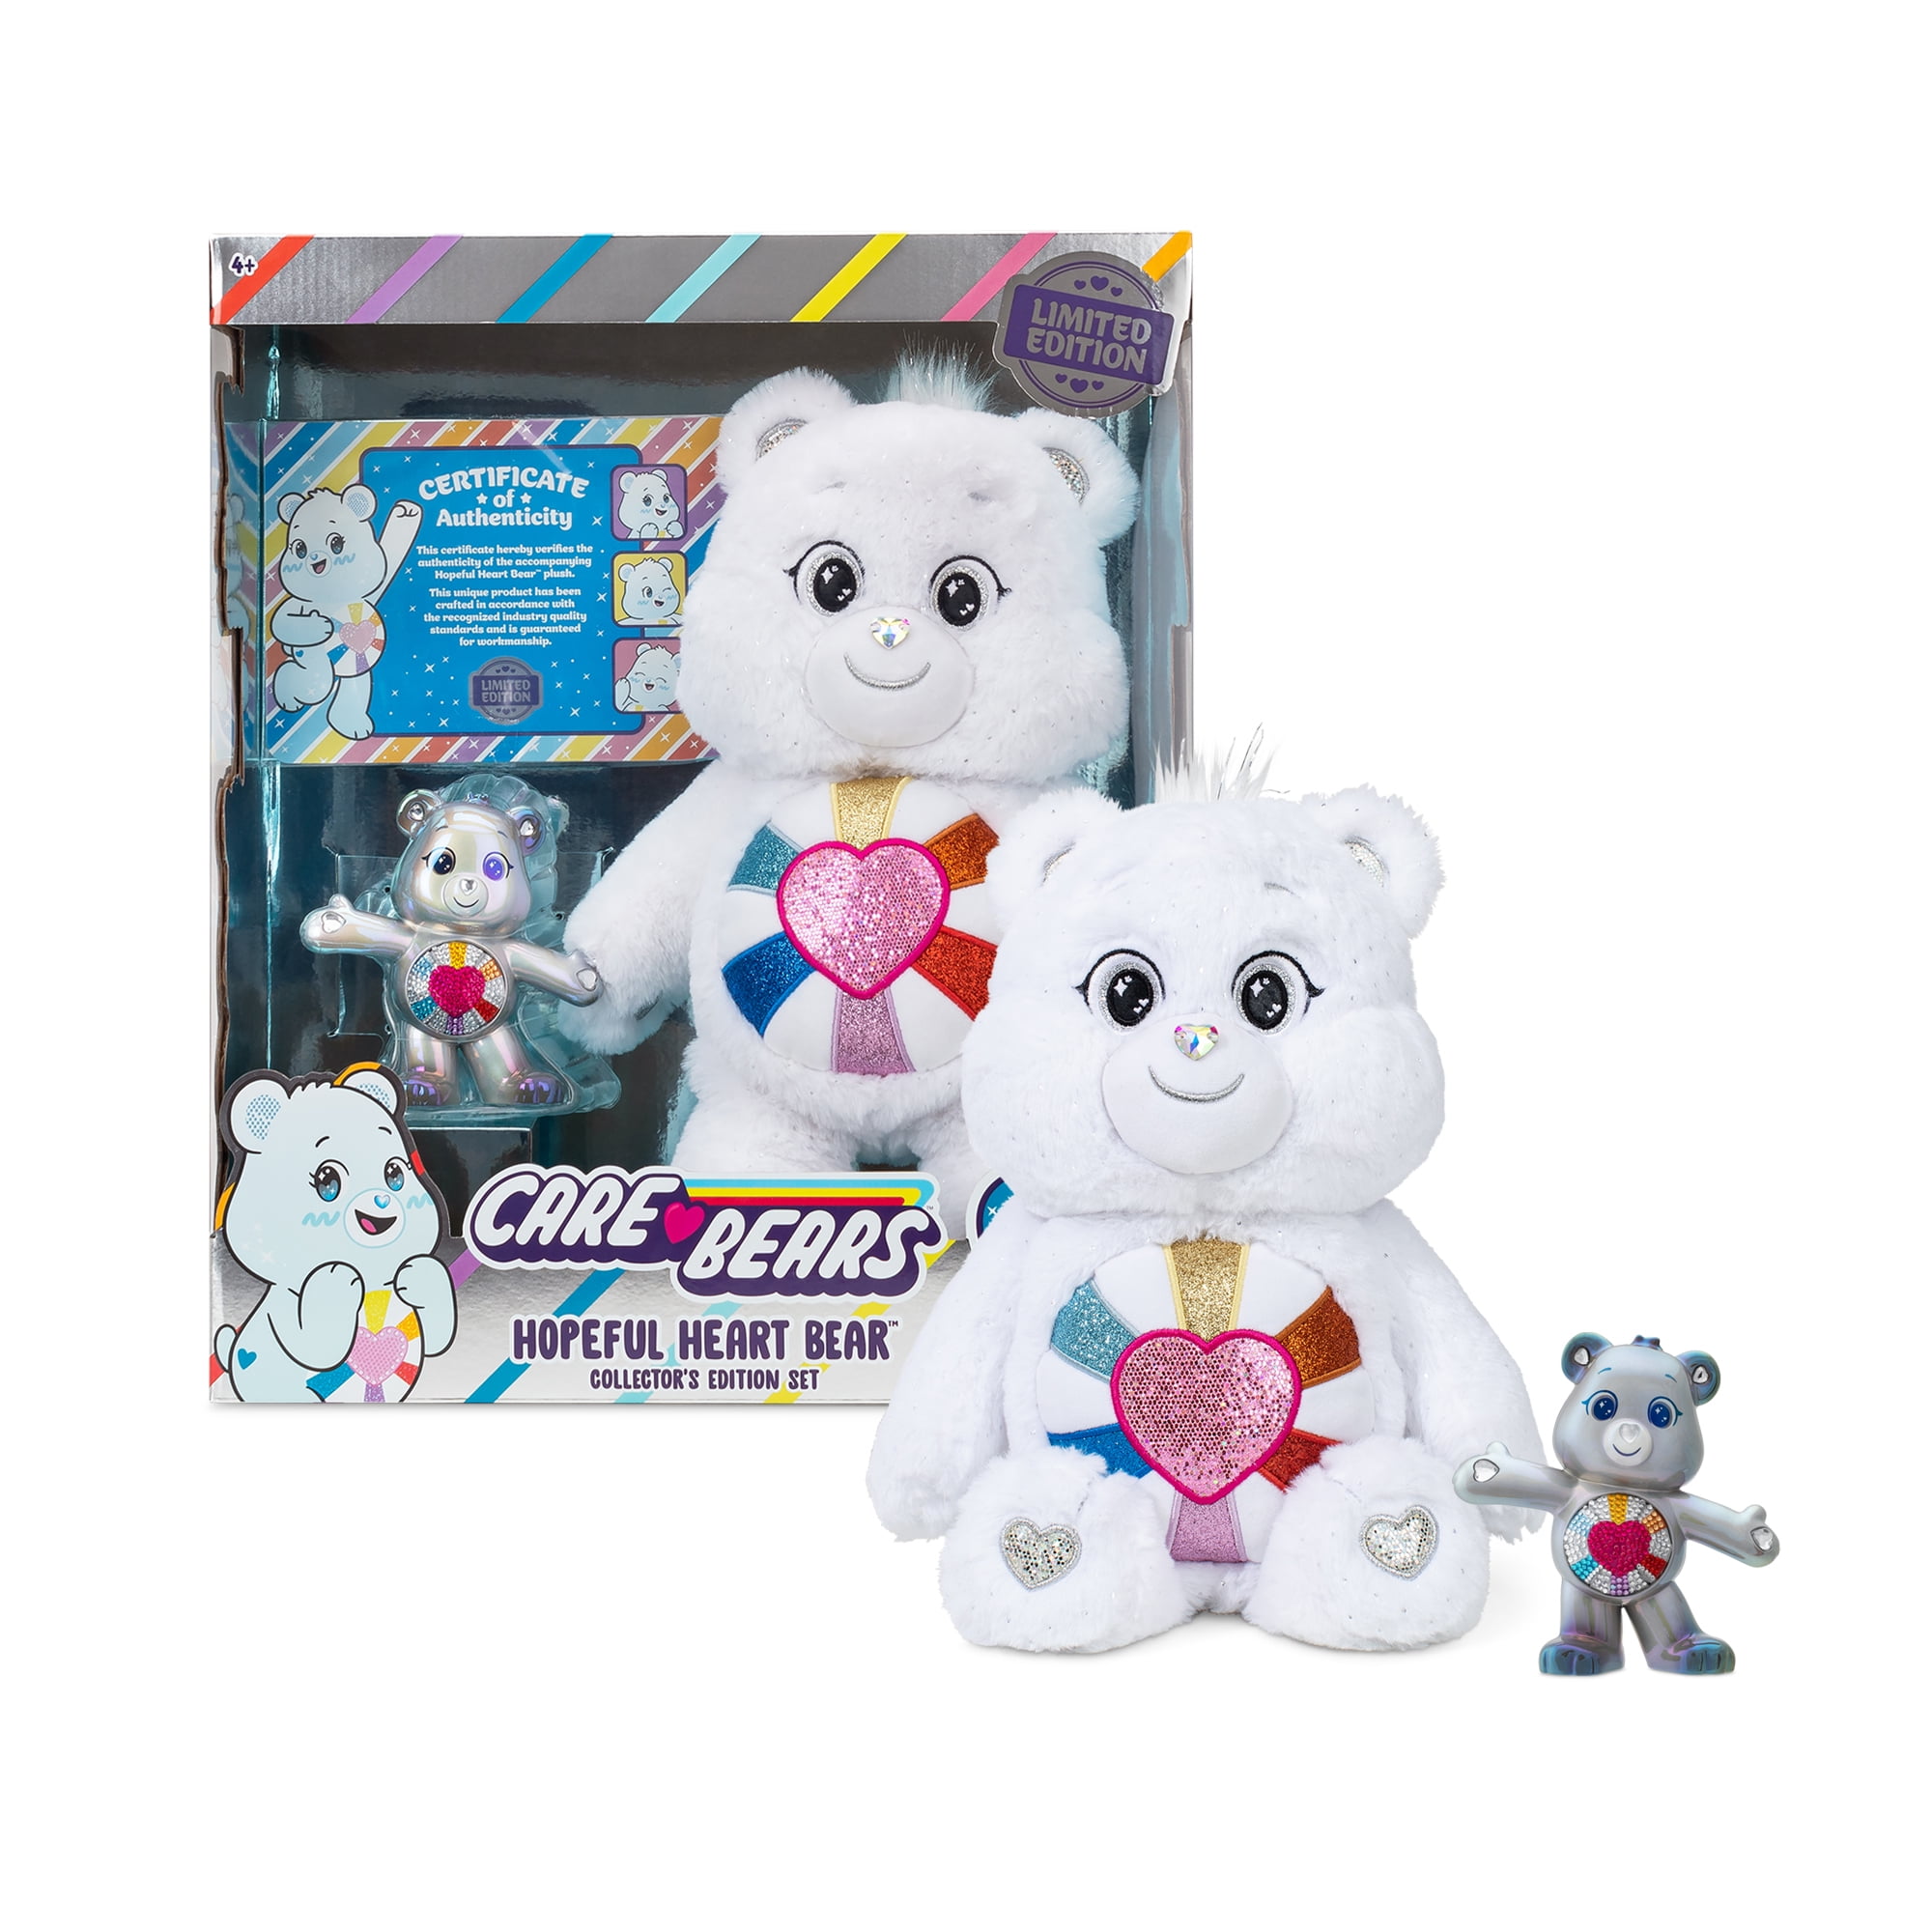 Care Bears 14 Hopeful Heart Bear and 5 Collectible Hopeful Heart Bear - Special Collector Limited Edition.